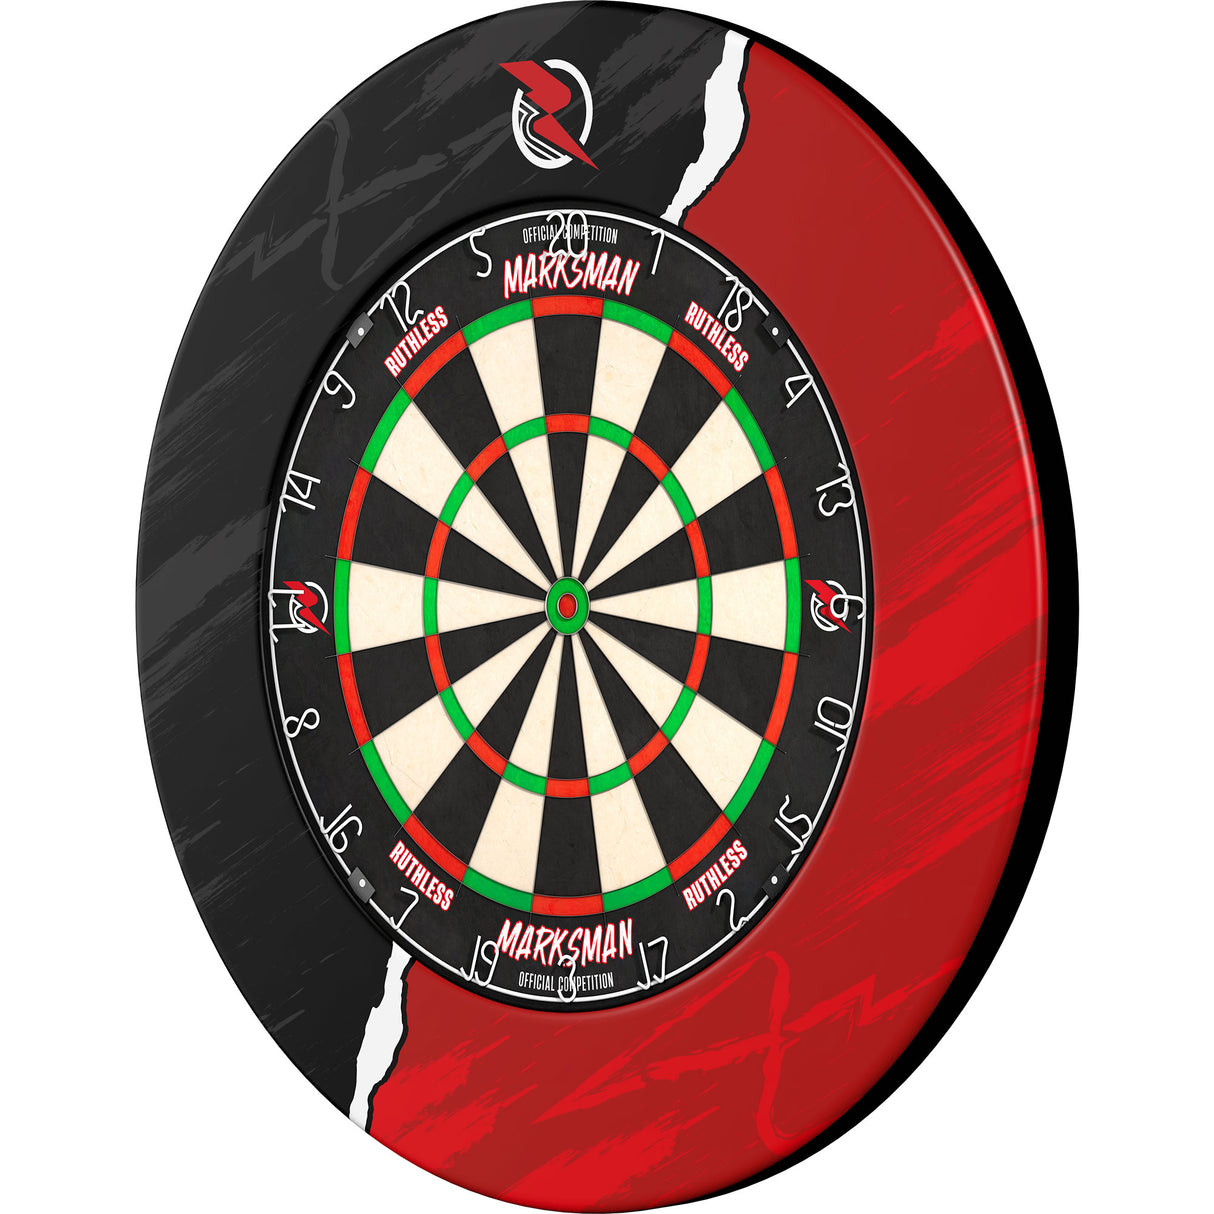 Ruthless Dartboard Surround - Professional - RipTorn - Black & Red